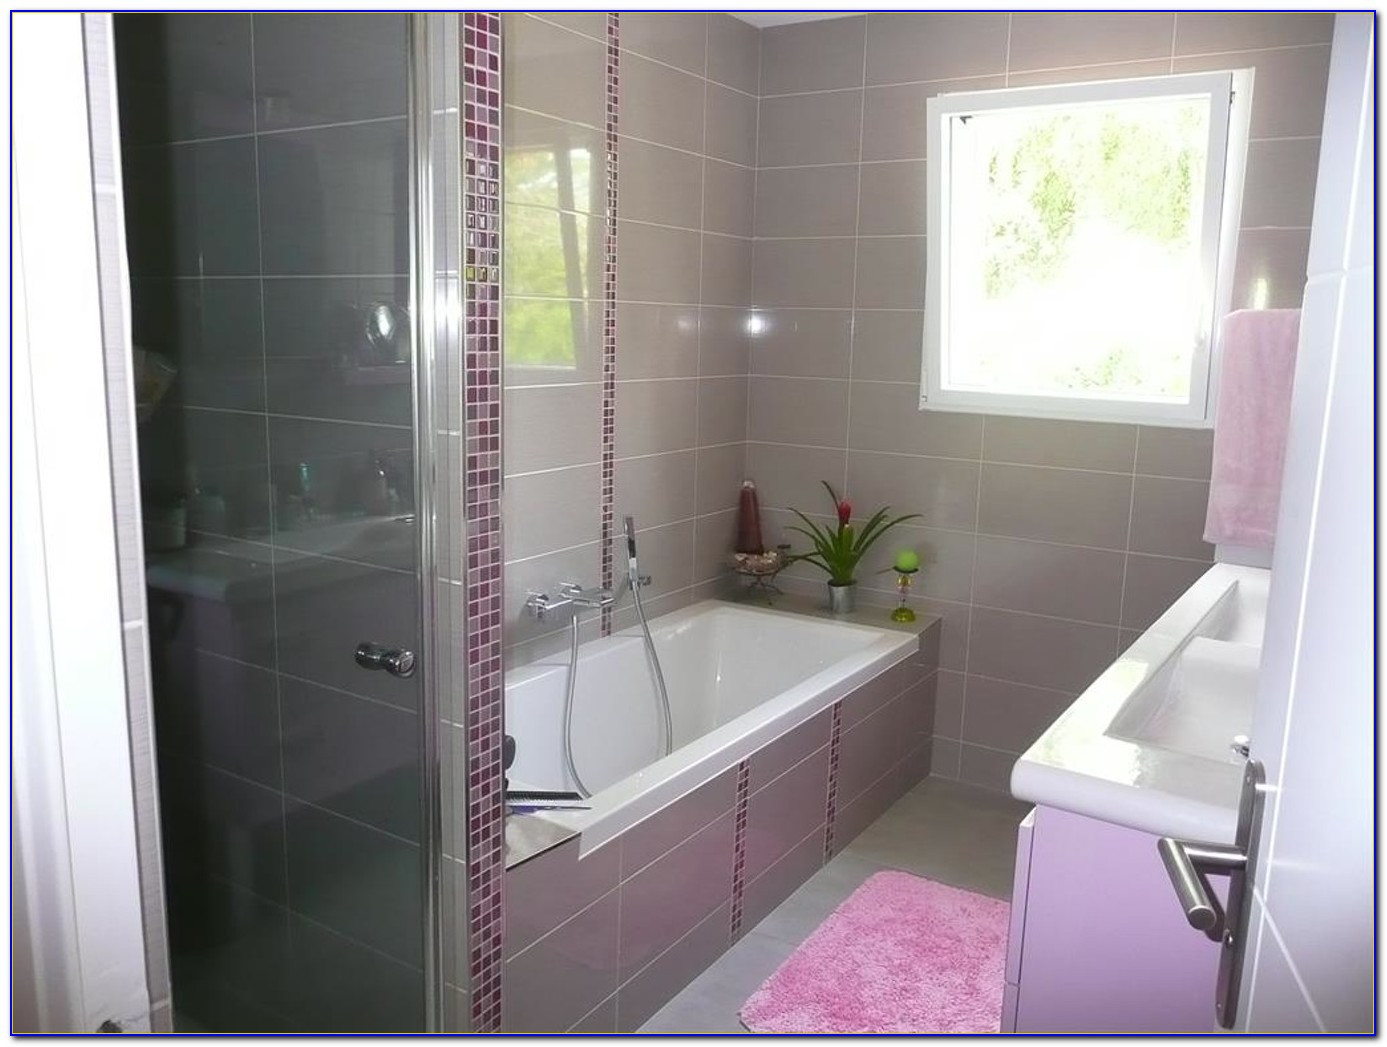 gallery of baignoire d 39 angle mini pour petite salle de bain et baignoire dans petite salle de bain petite salle de bain avec baignoire et douche for baignoire petite salle de bain avec plan petite